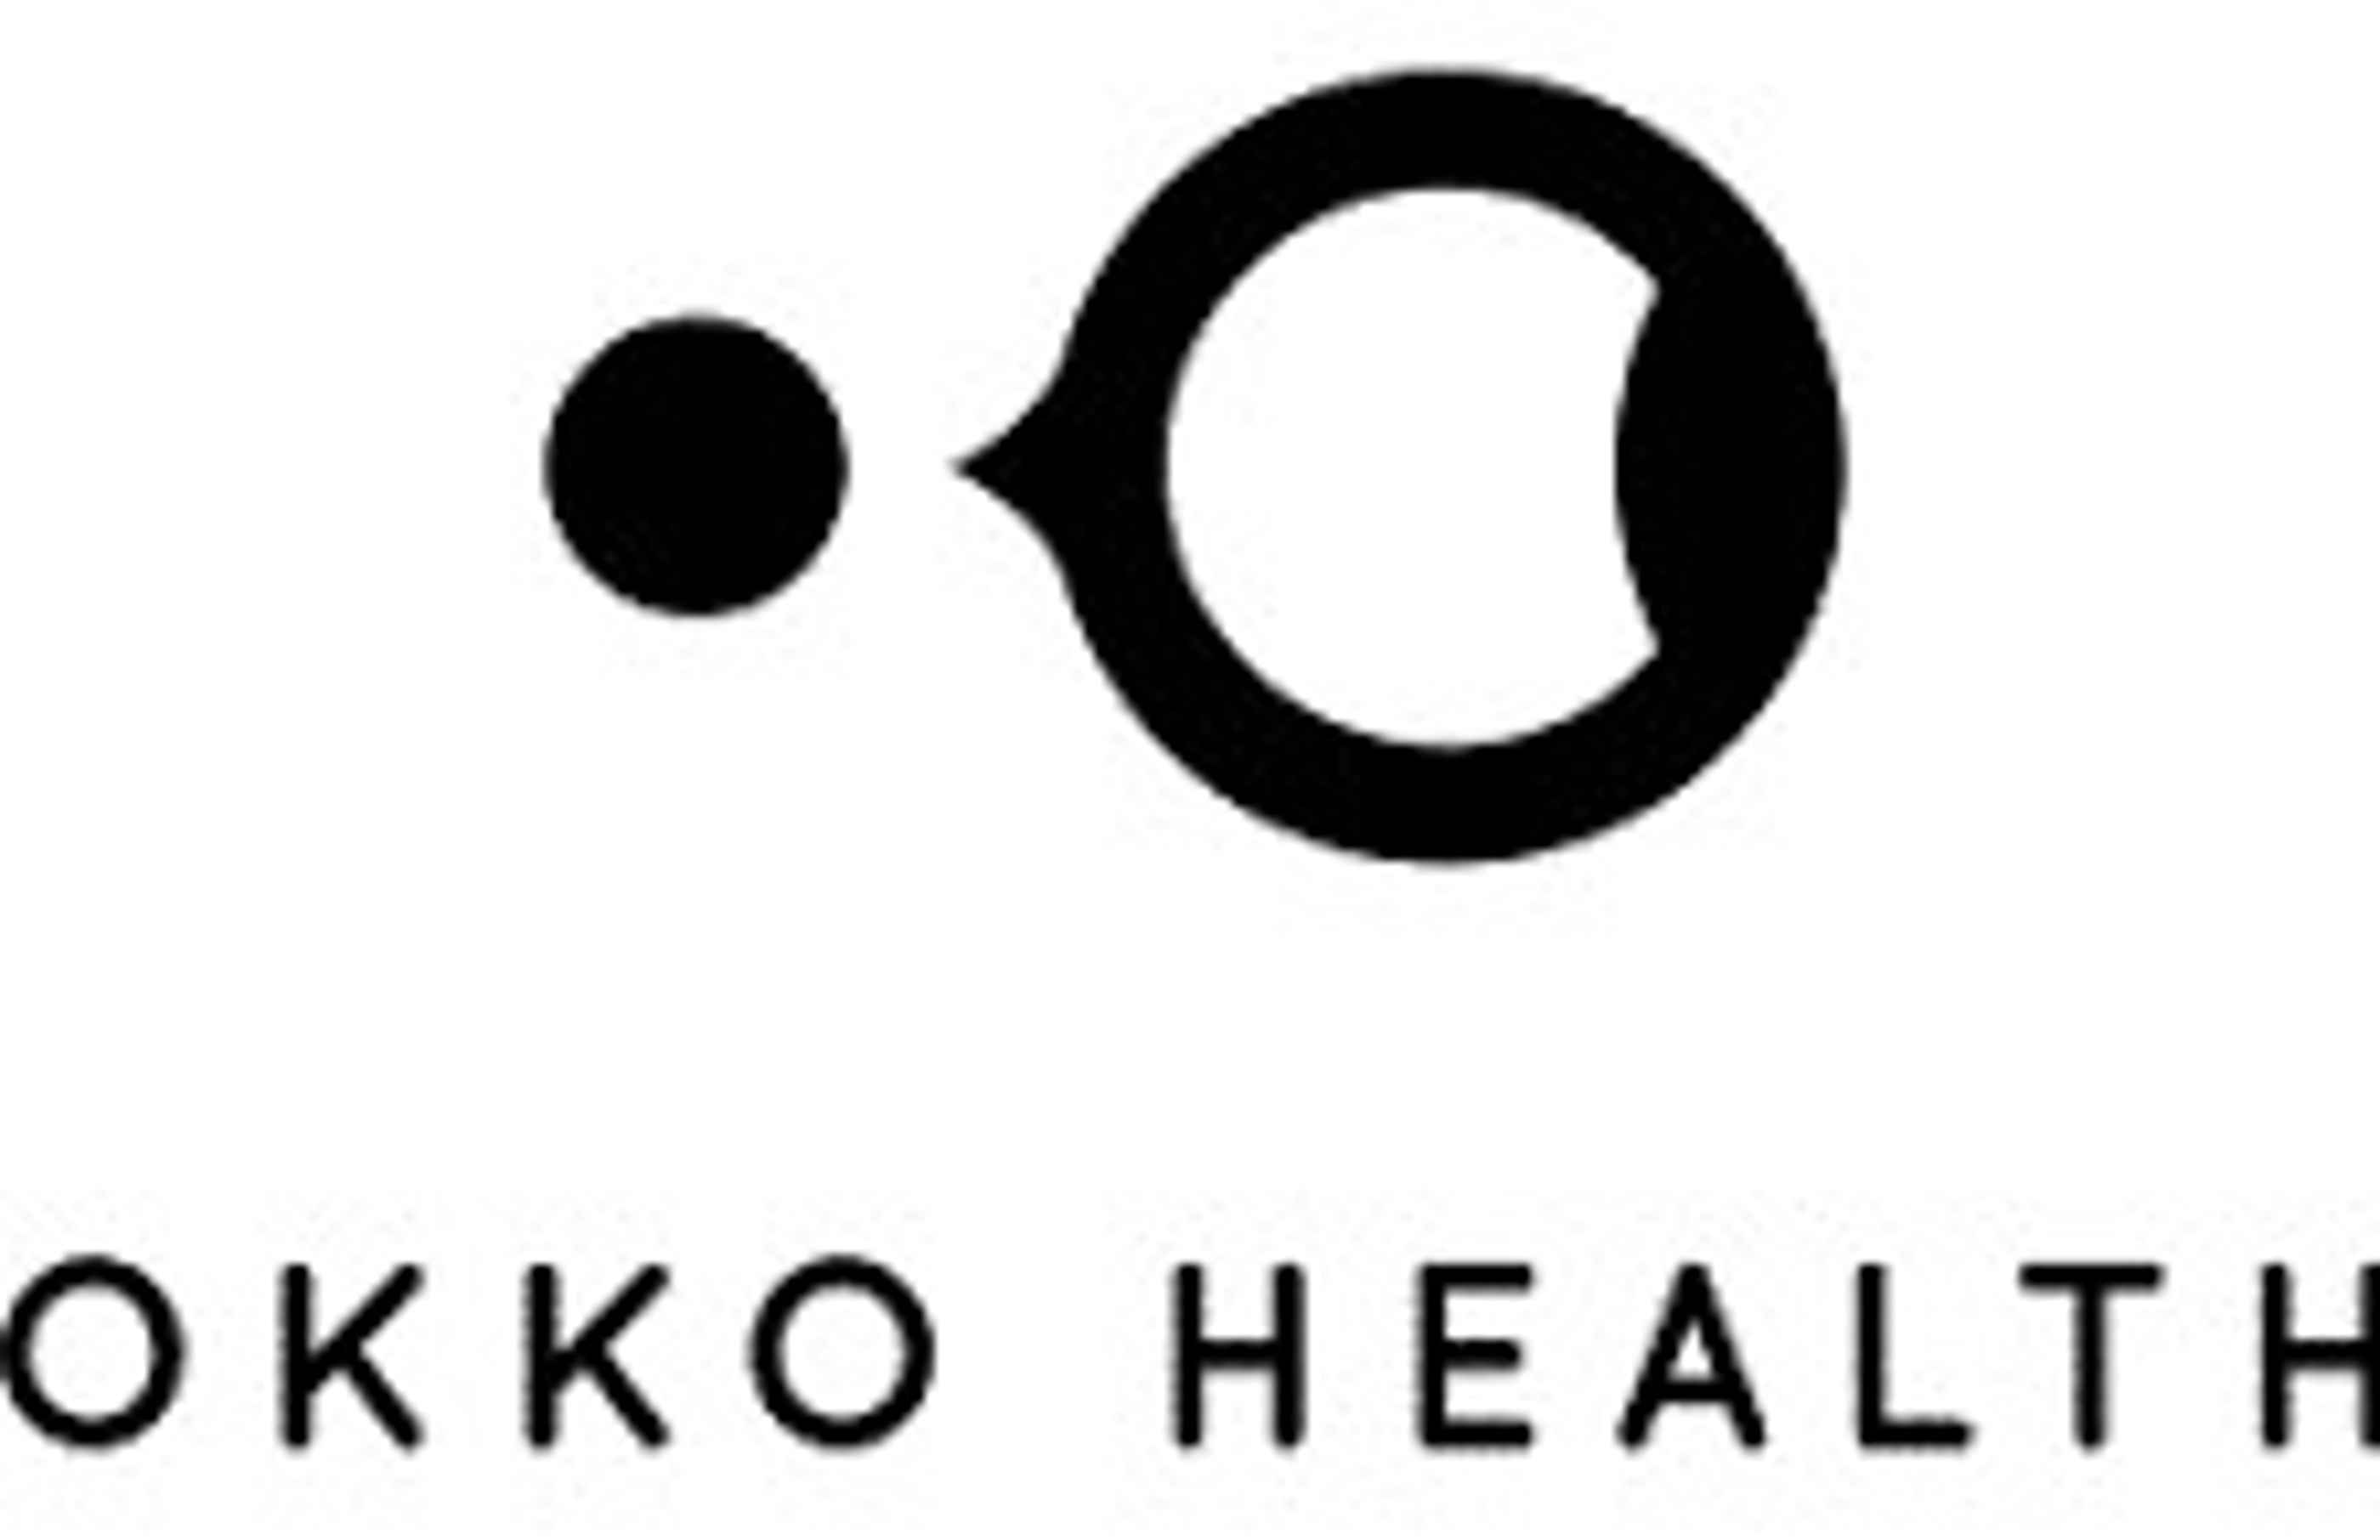 okko health logo.jpg